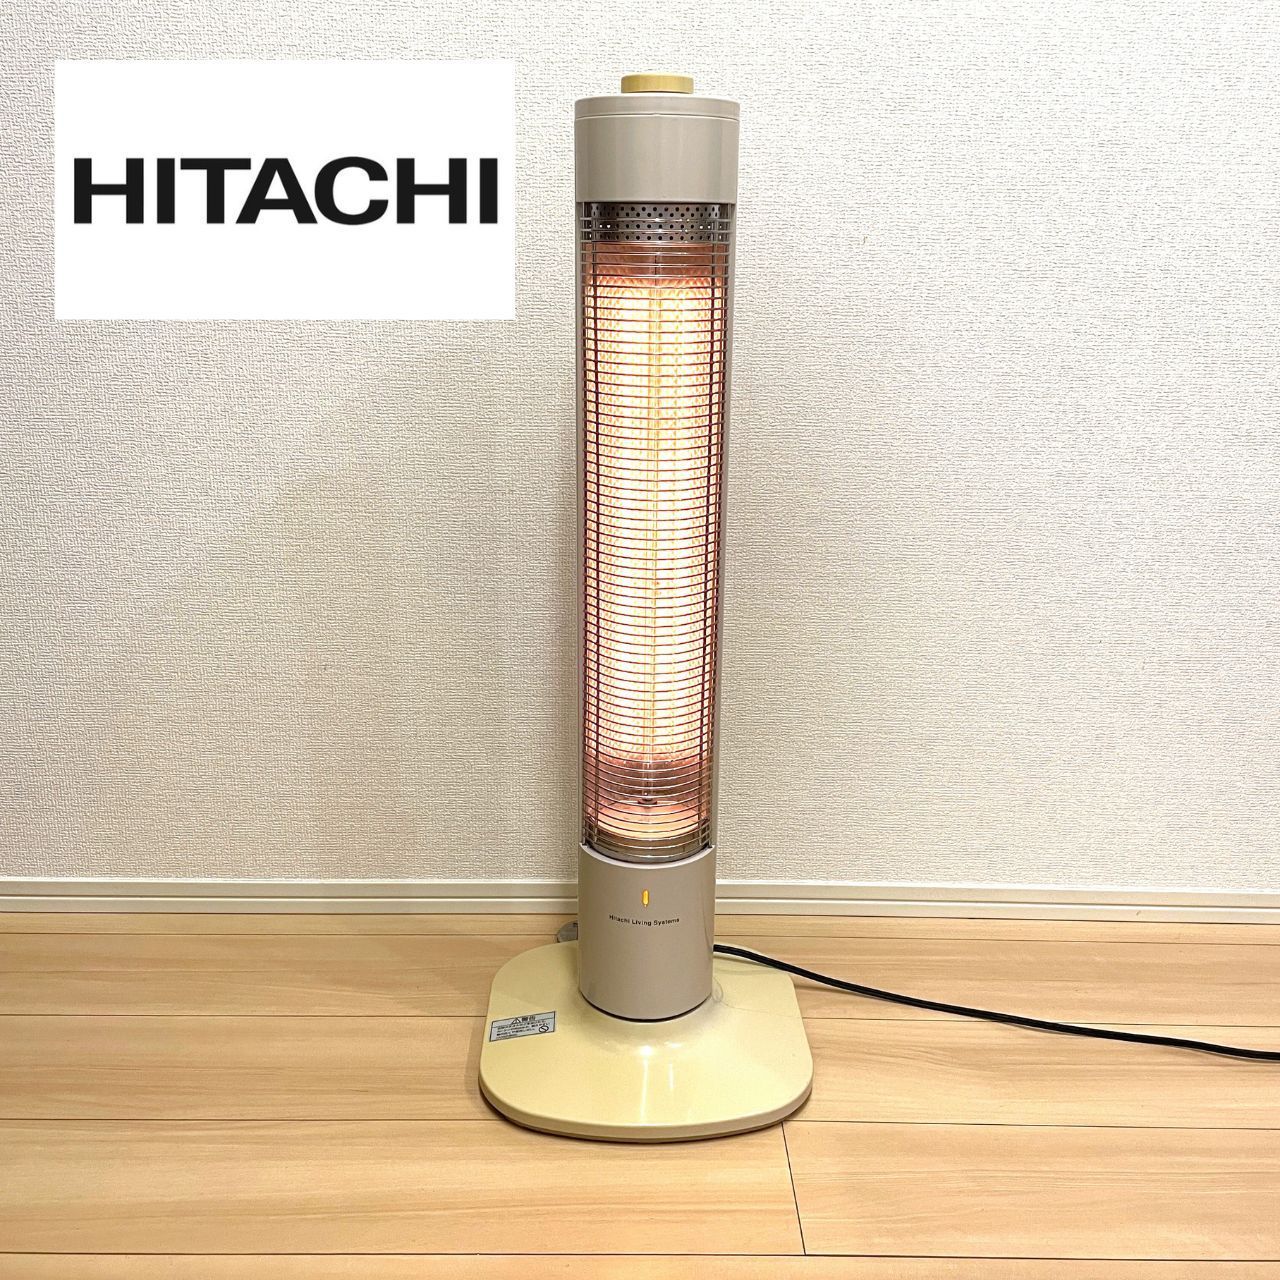 HITACHI カーボンヒーター HLH-110K - 電気ヒーター